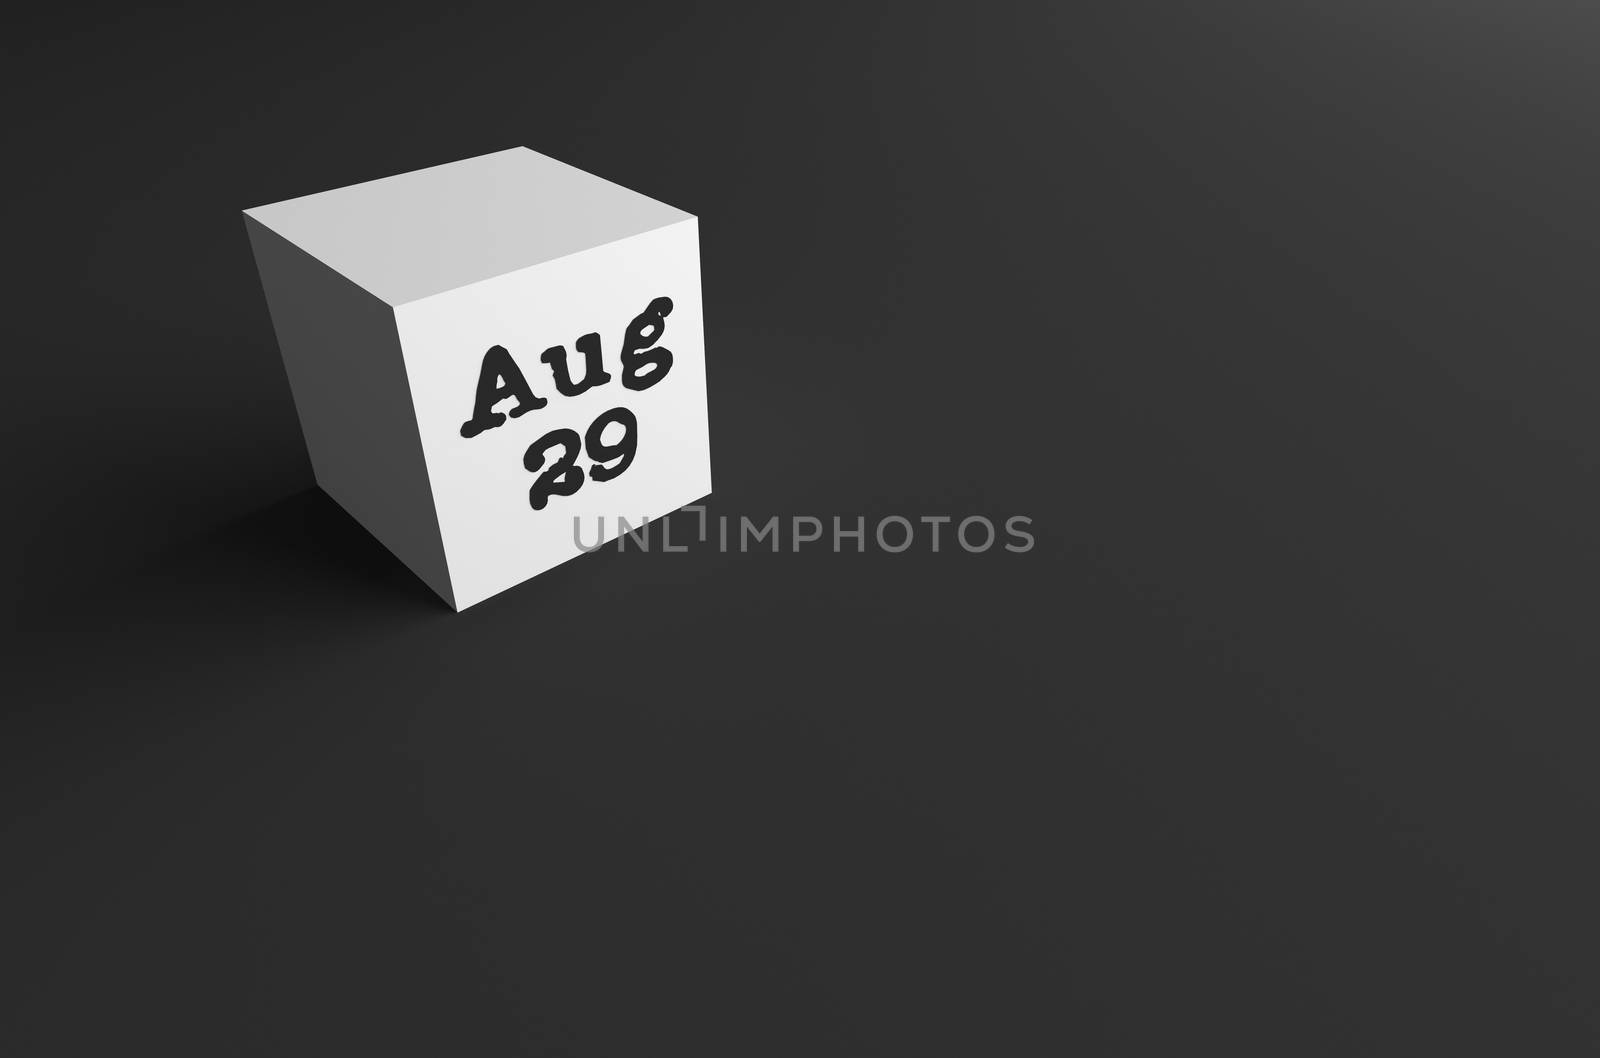 3D RENDERING OF Aug 29 by PrettyTG